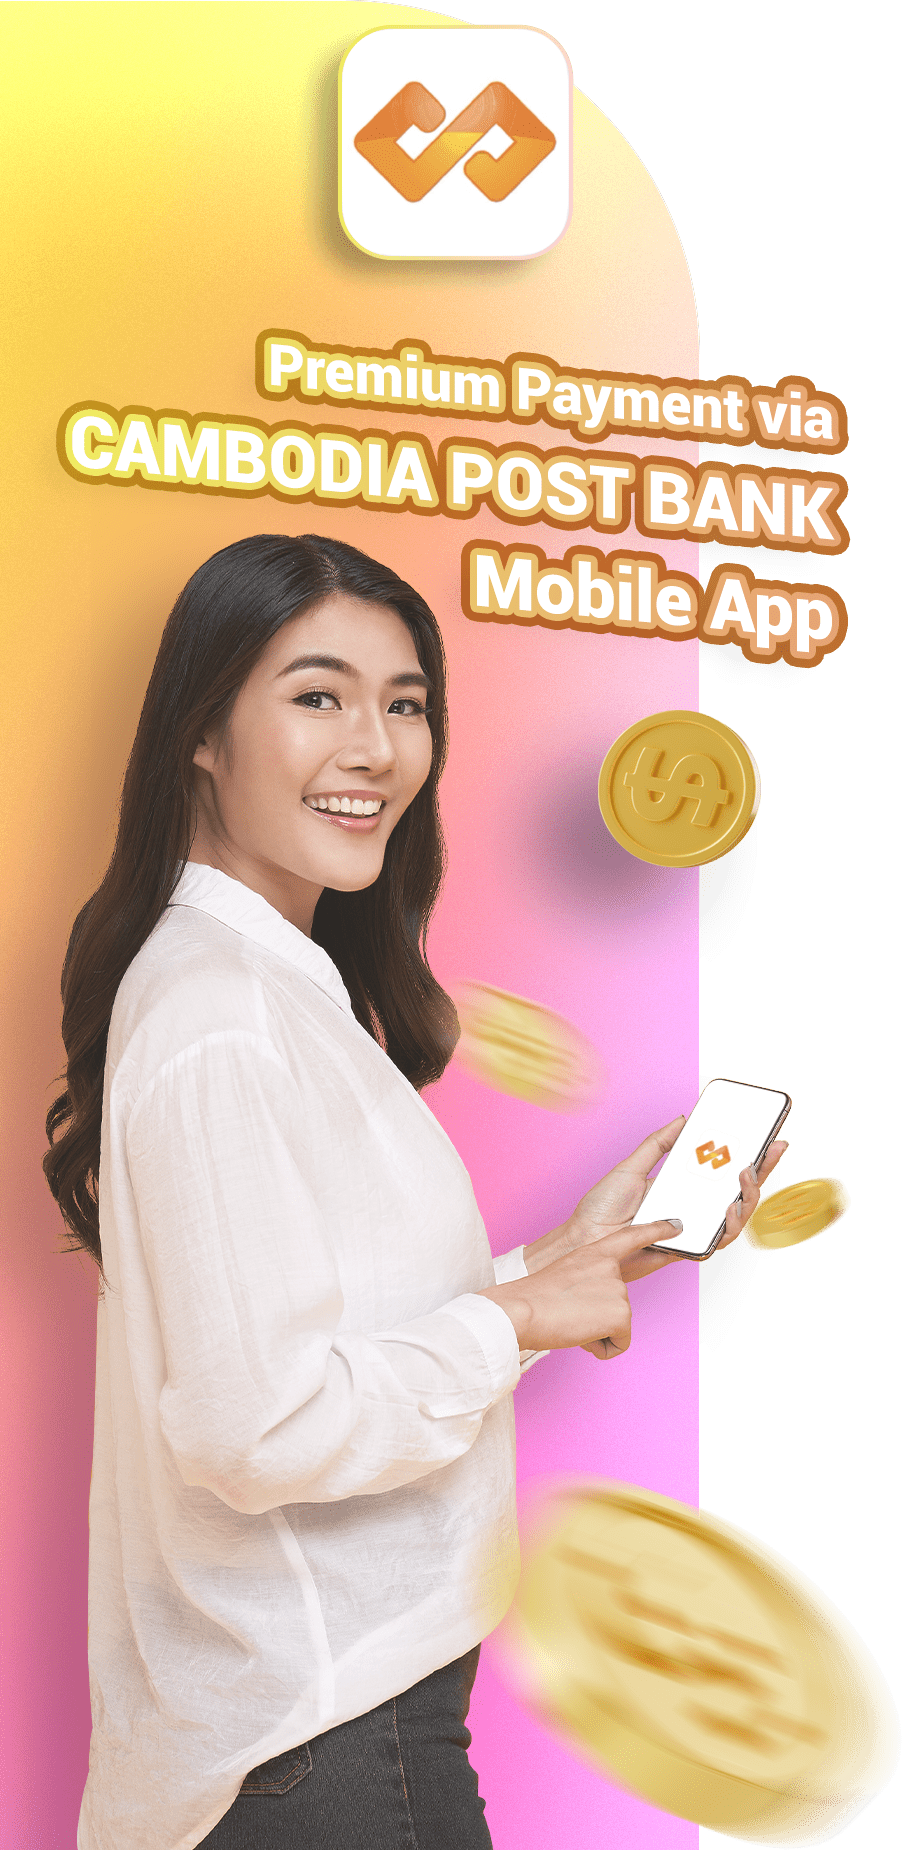 Premium payment via Mobile Bank_Cambodia Post Bank_V Banner (2)